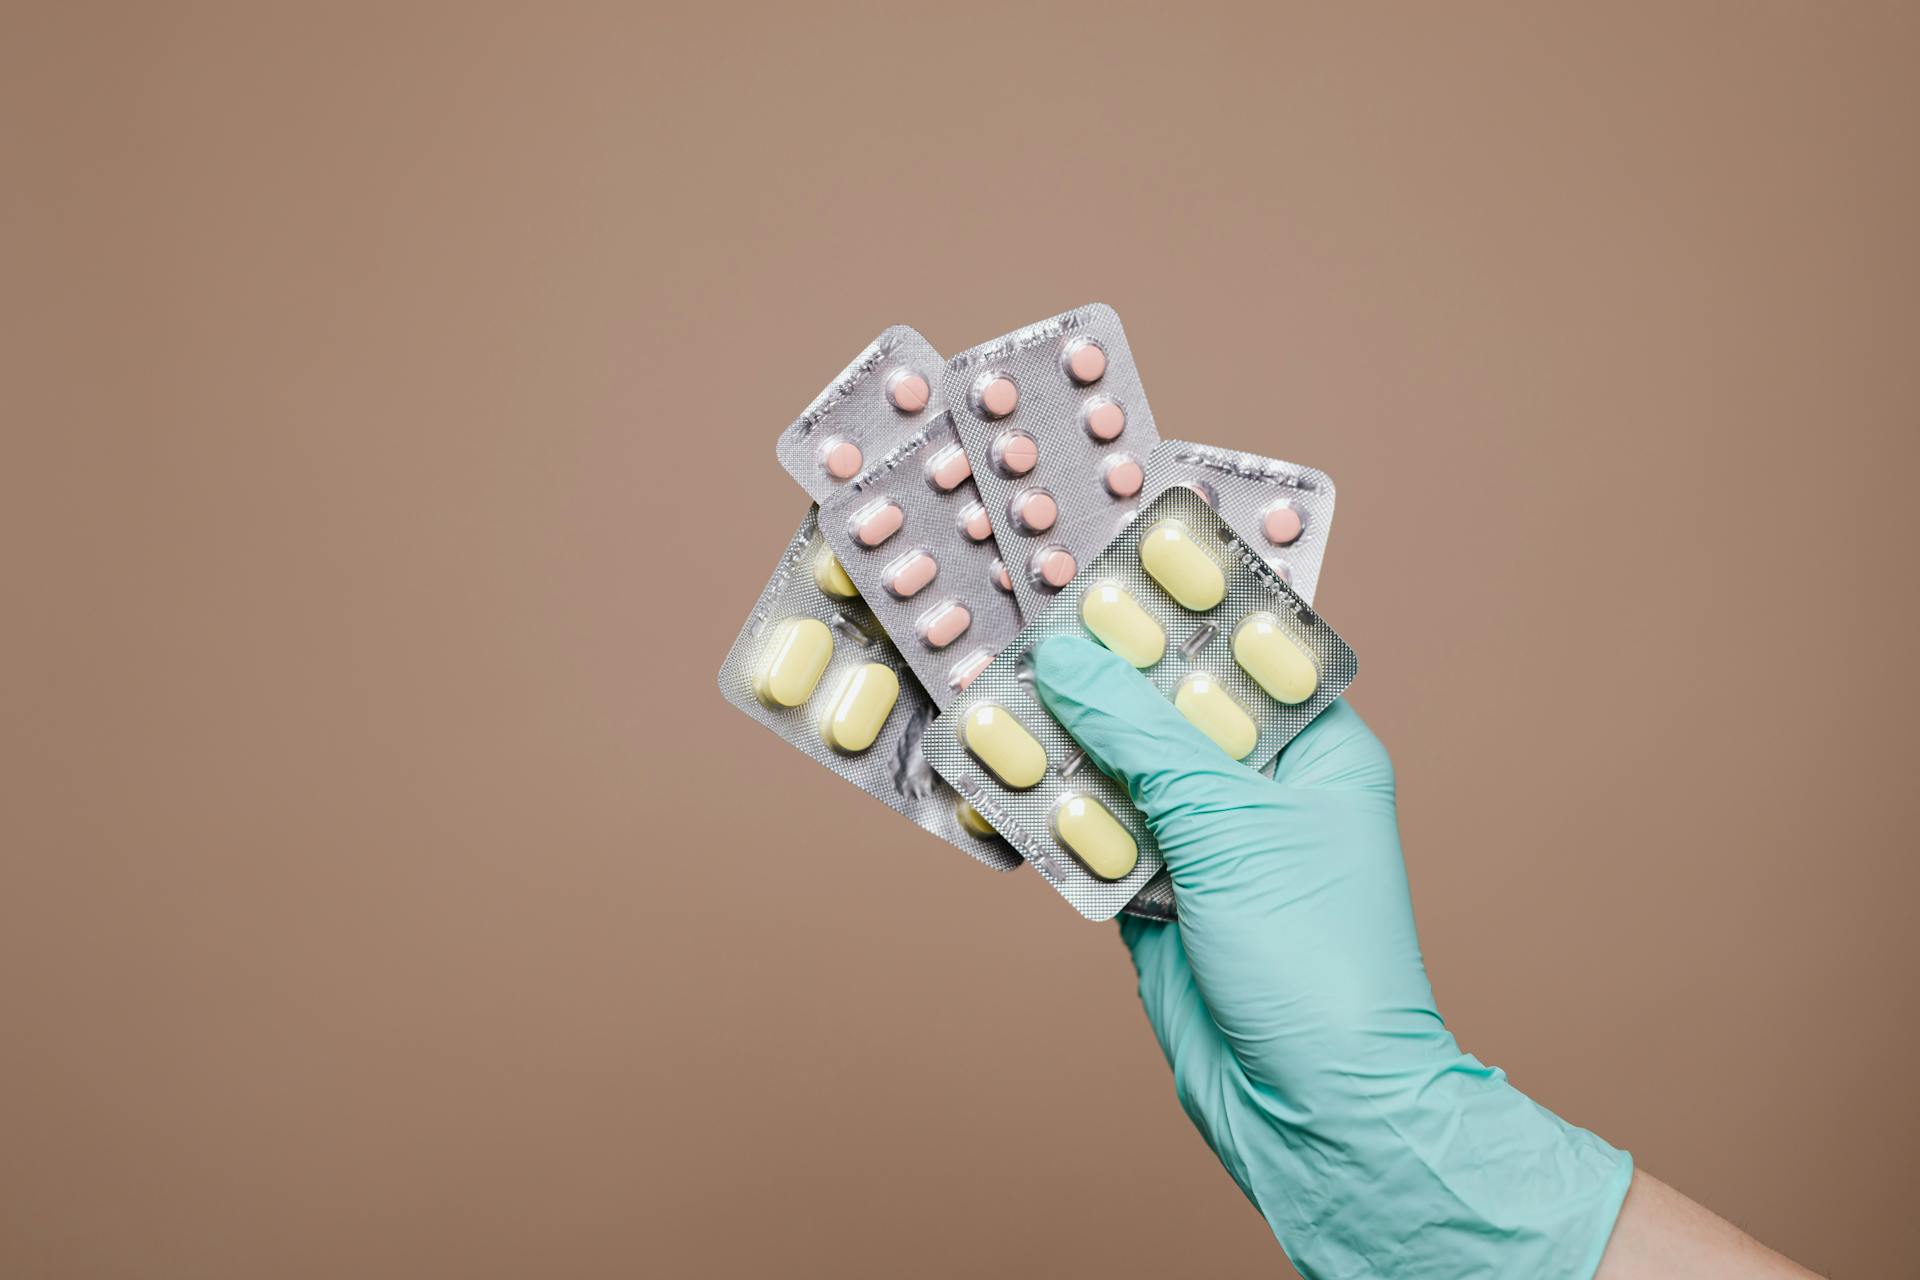 Personne tenant un médicament | Source : Pexels